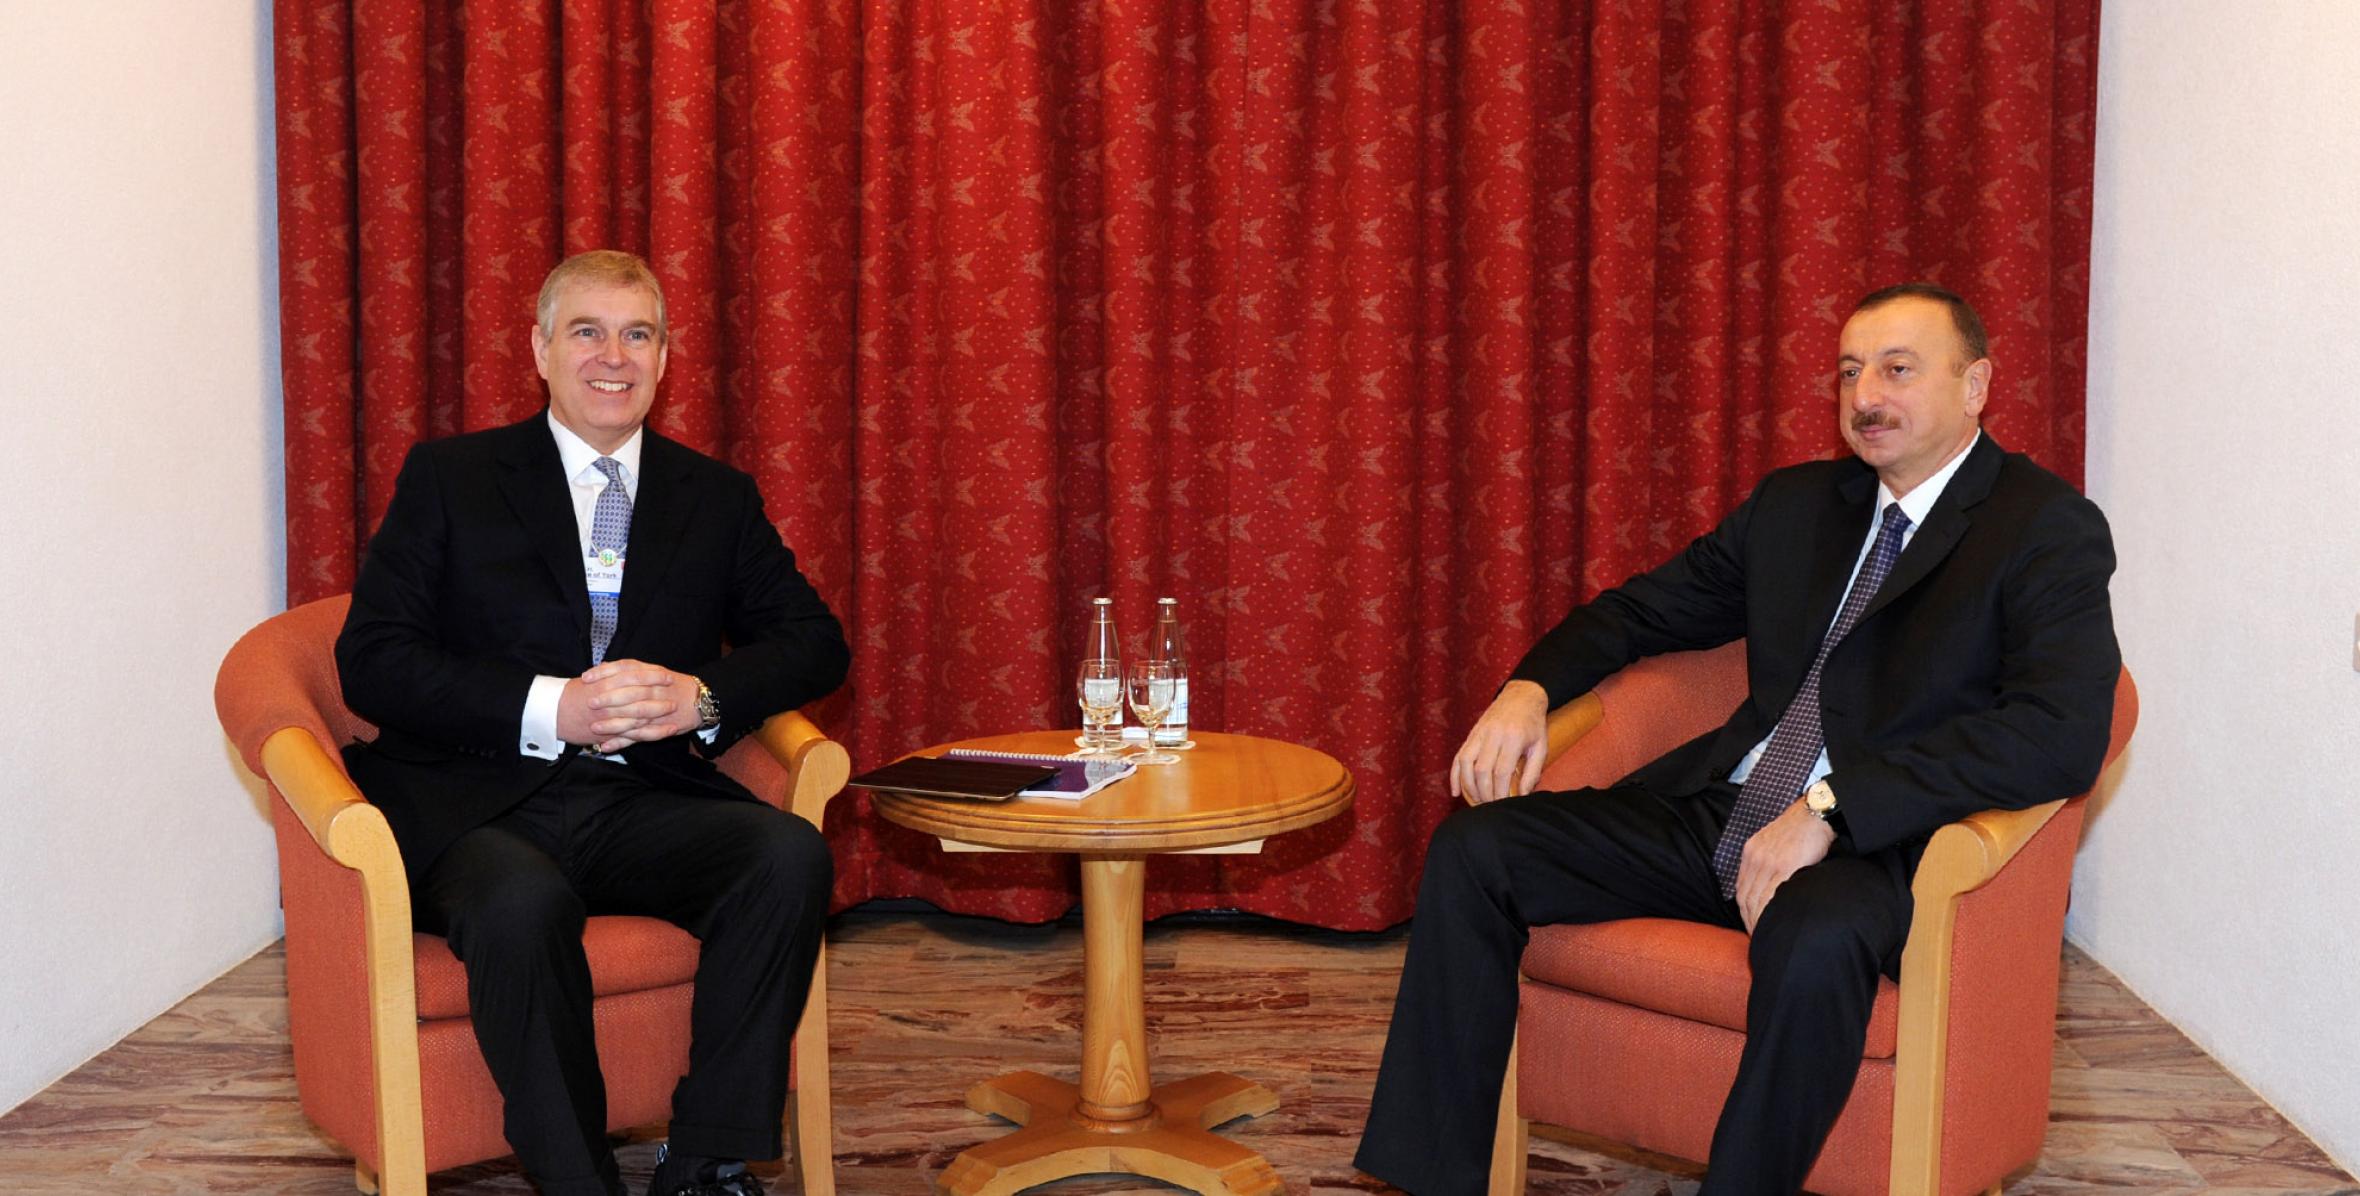 Ilham Aliyev met with Prince Andrew, Duke of York